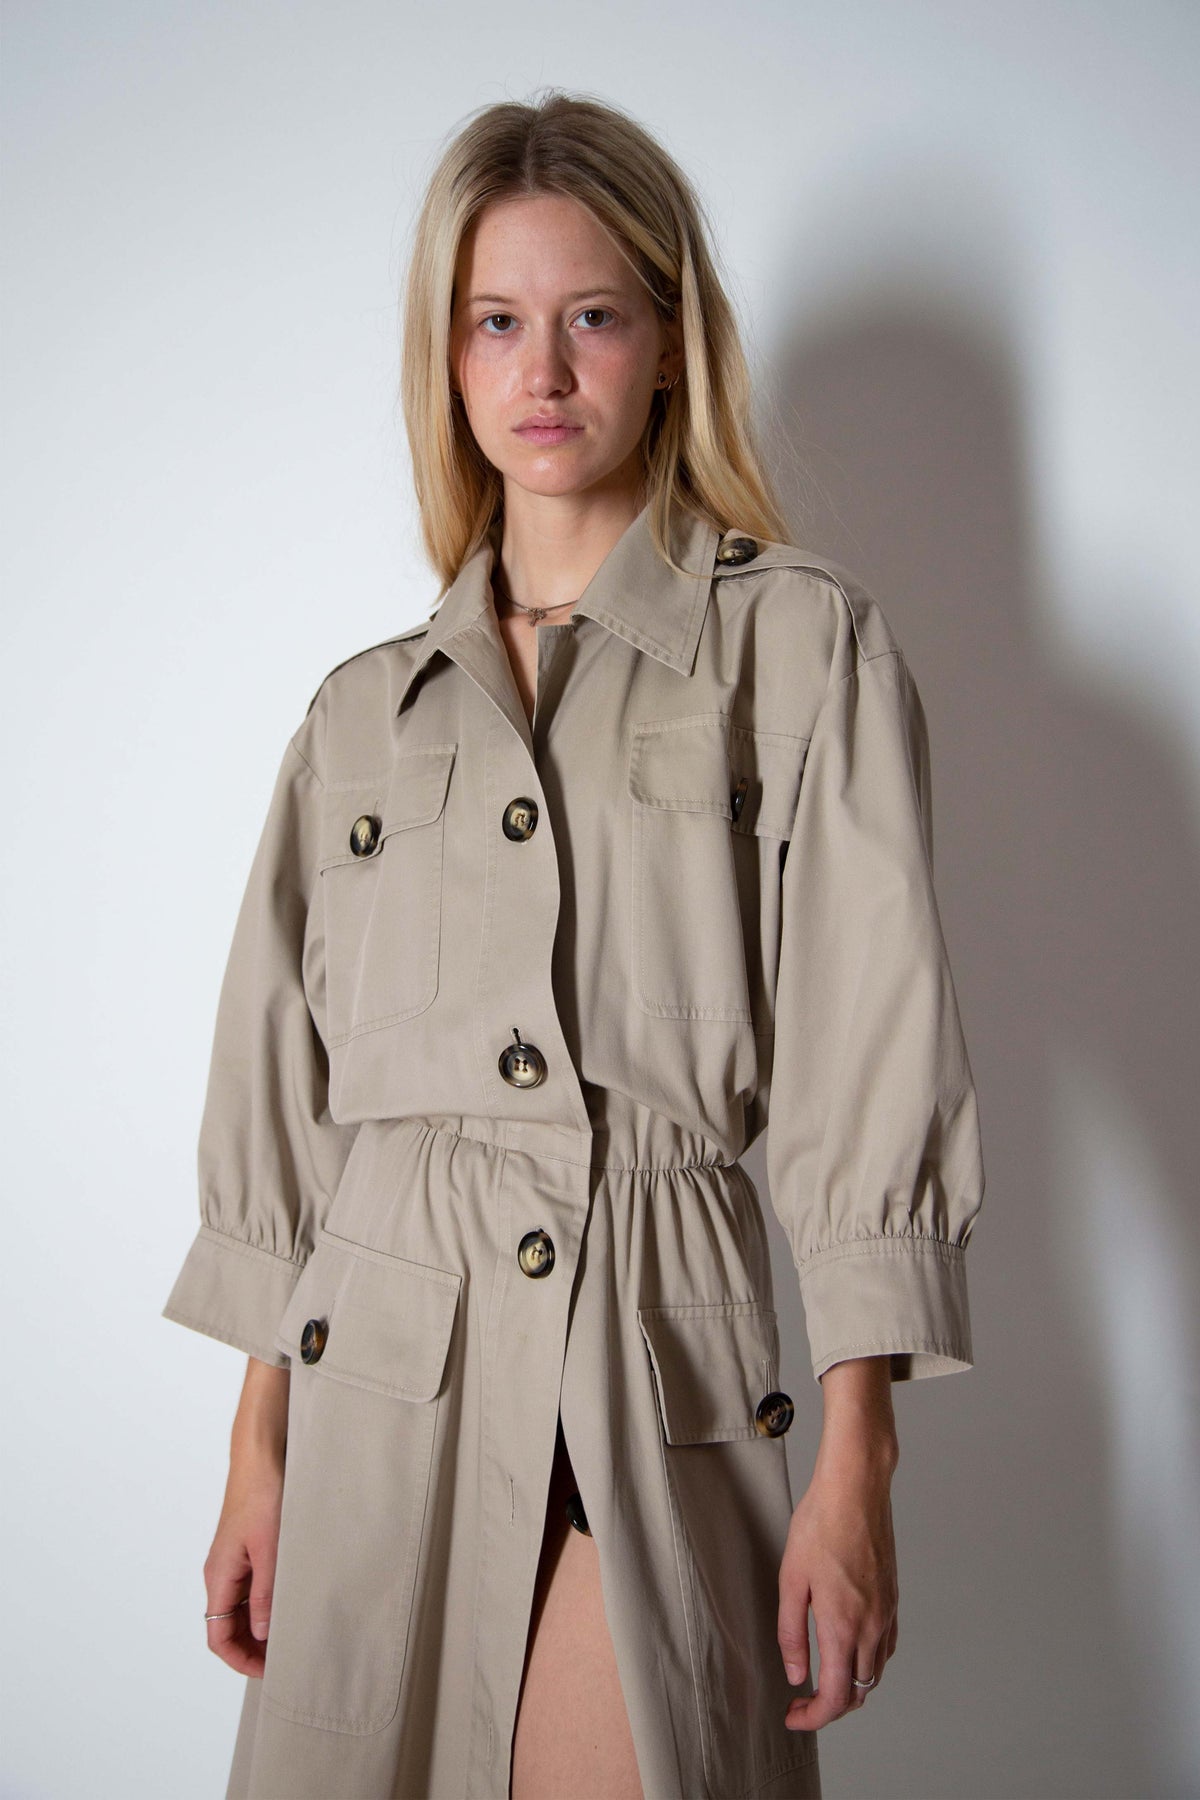 Yves Saint Laurent safari dress